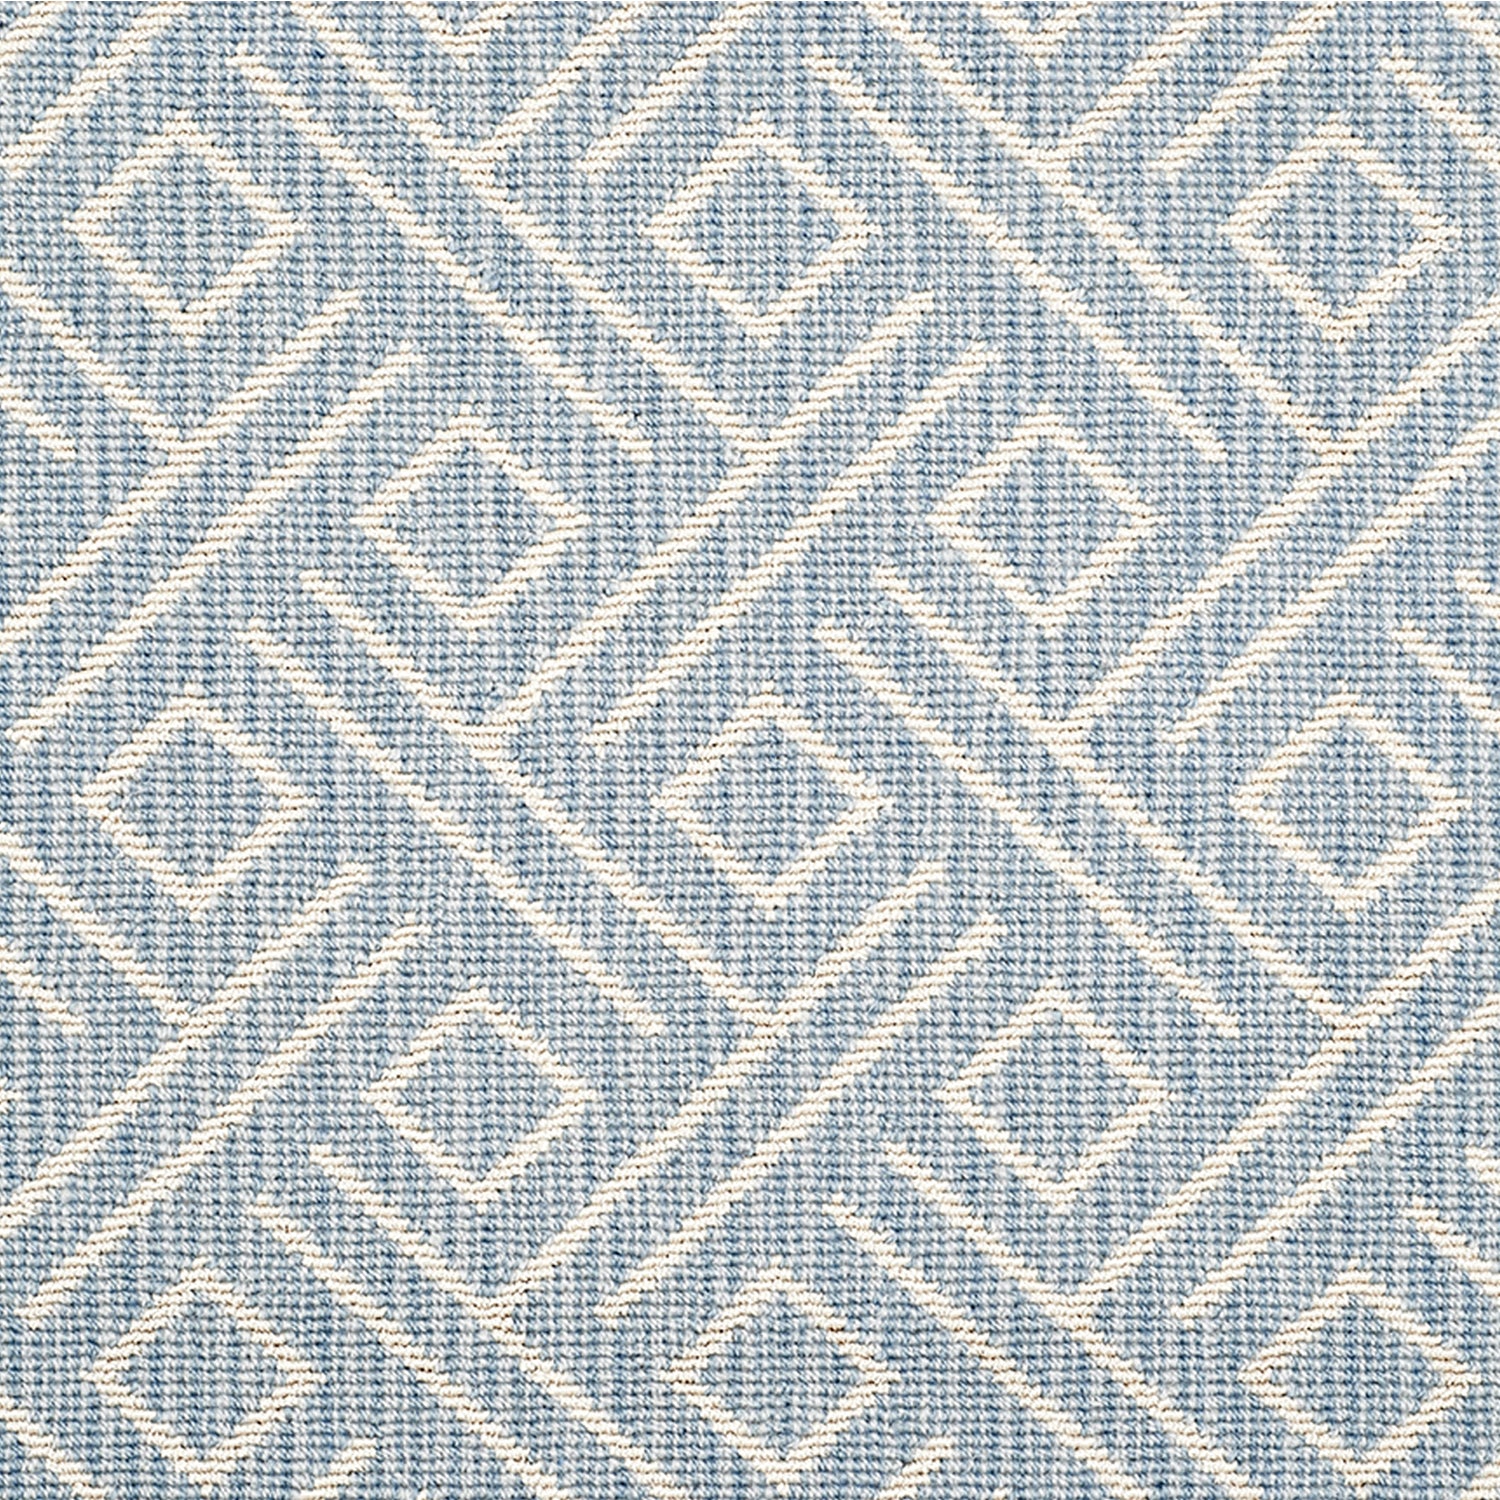 Wool-blend broadloom carpet swatch in a geometric line and square pattern in cream on a sky blue field.